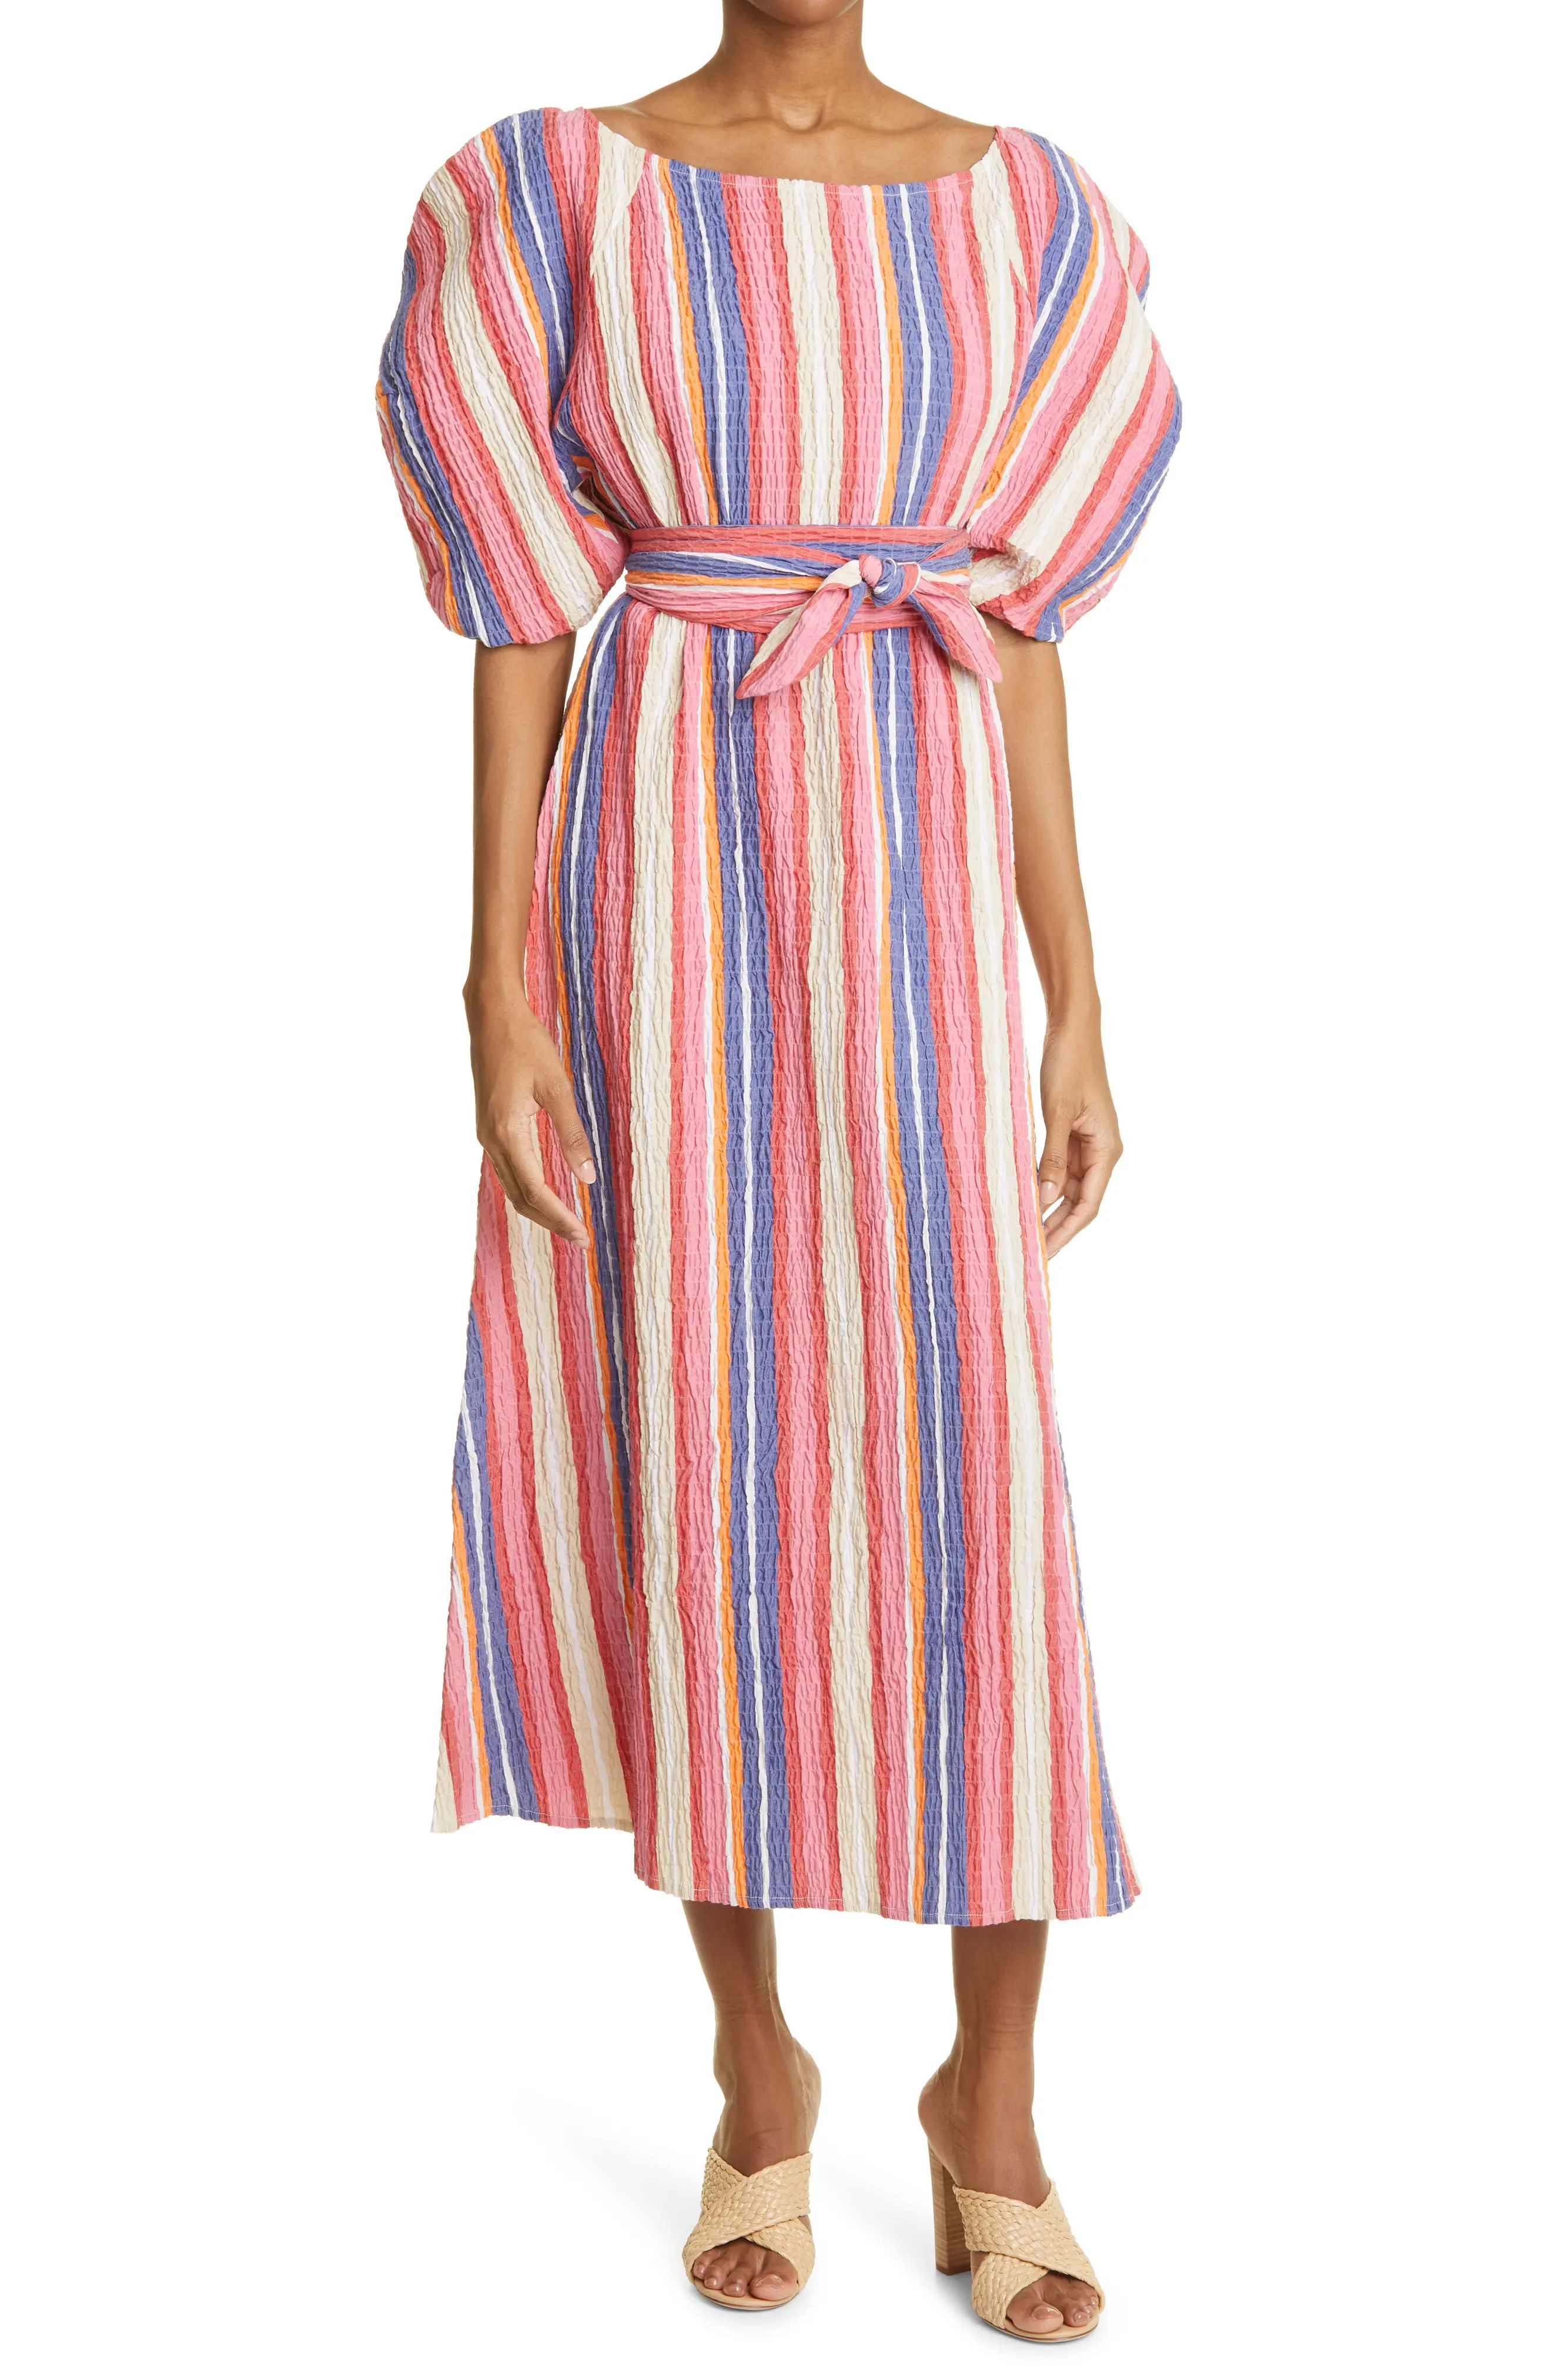 Mara Hoffman Cecilia Stripe Organic Cotton Dress in Rainbow Multi at Nordstrom, Size 2X | Nordstrom